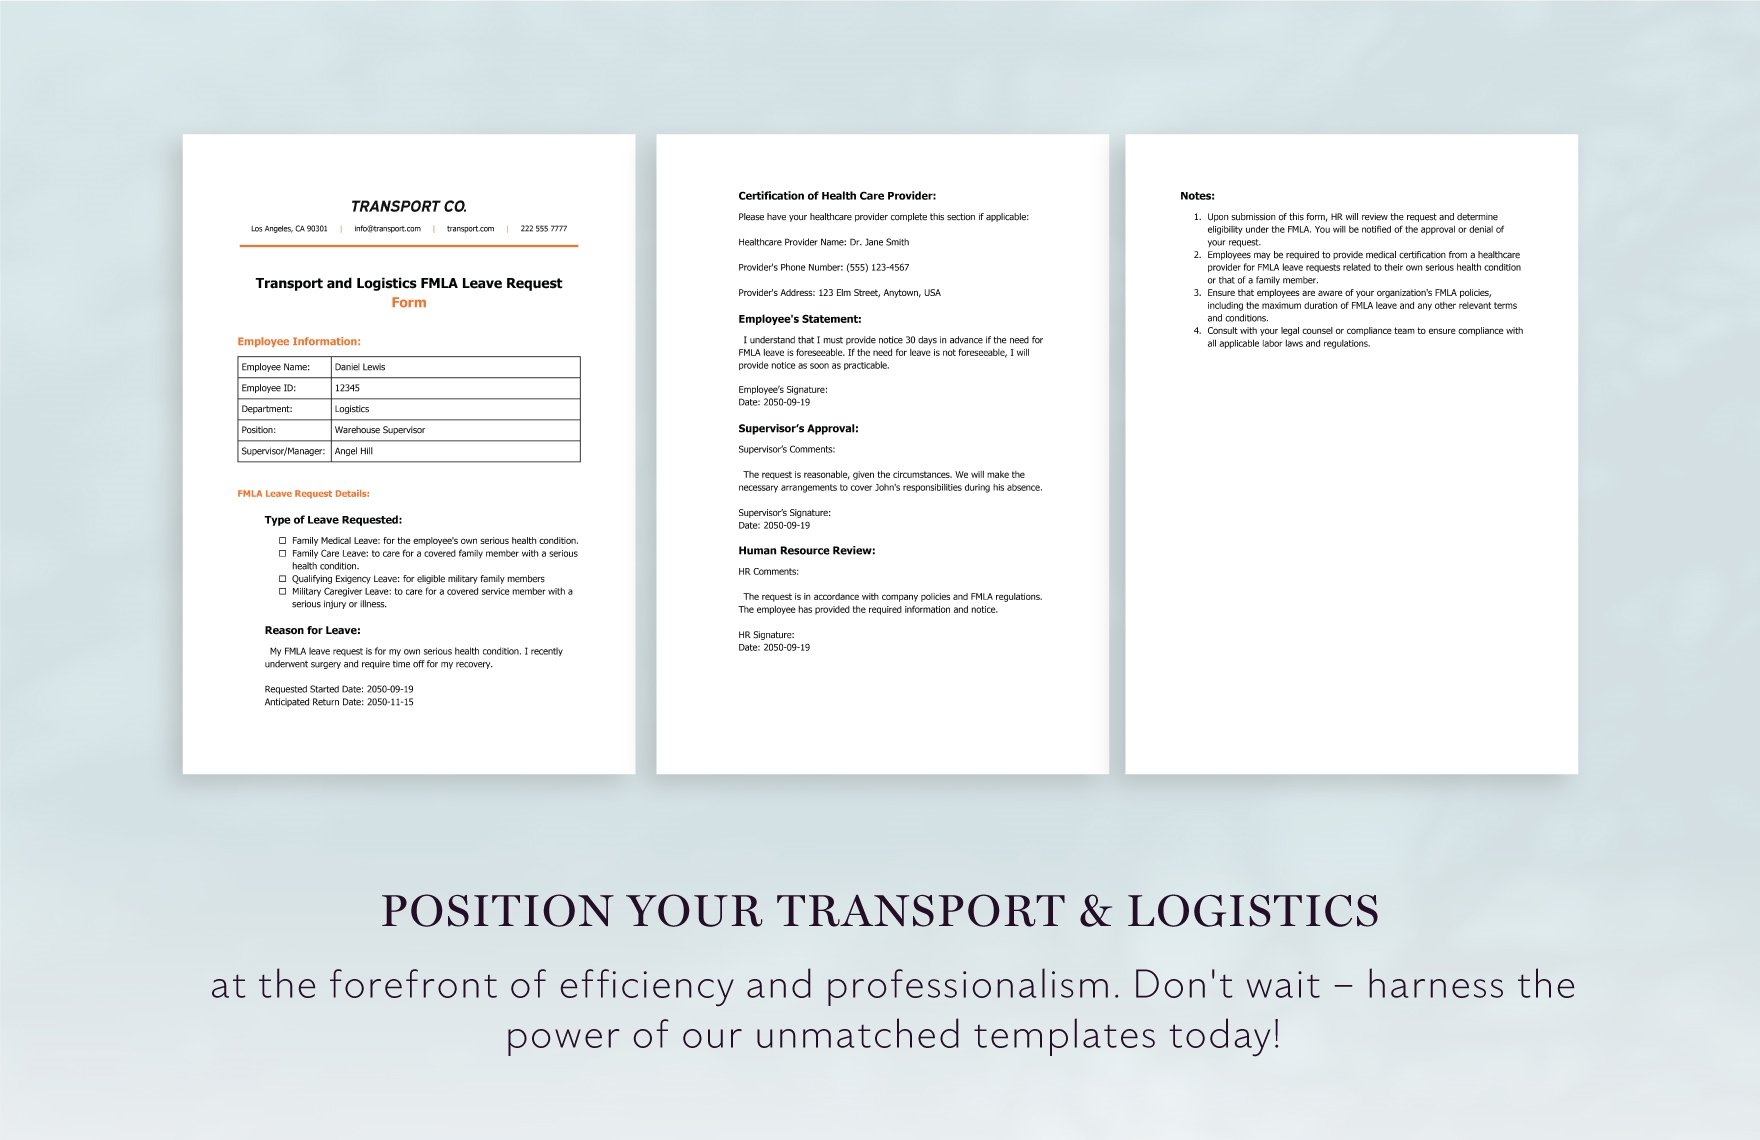 Transport and Logistics FMLA Leave Request Form Template